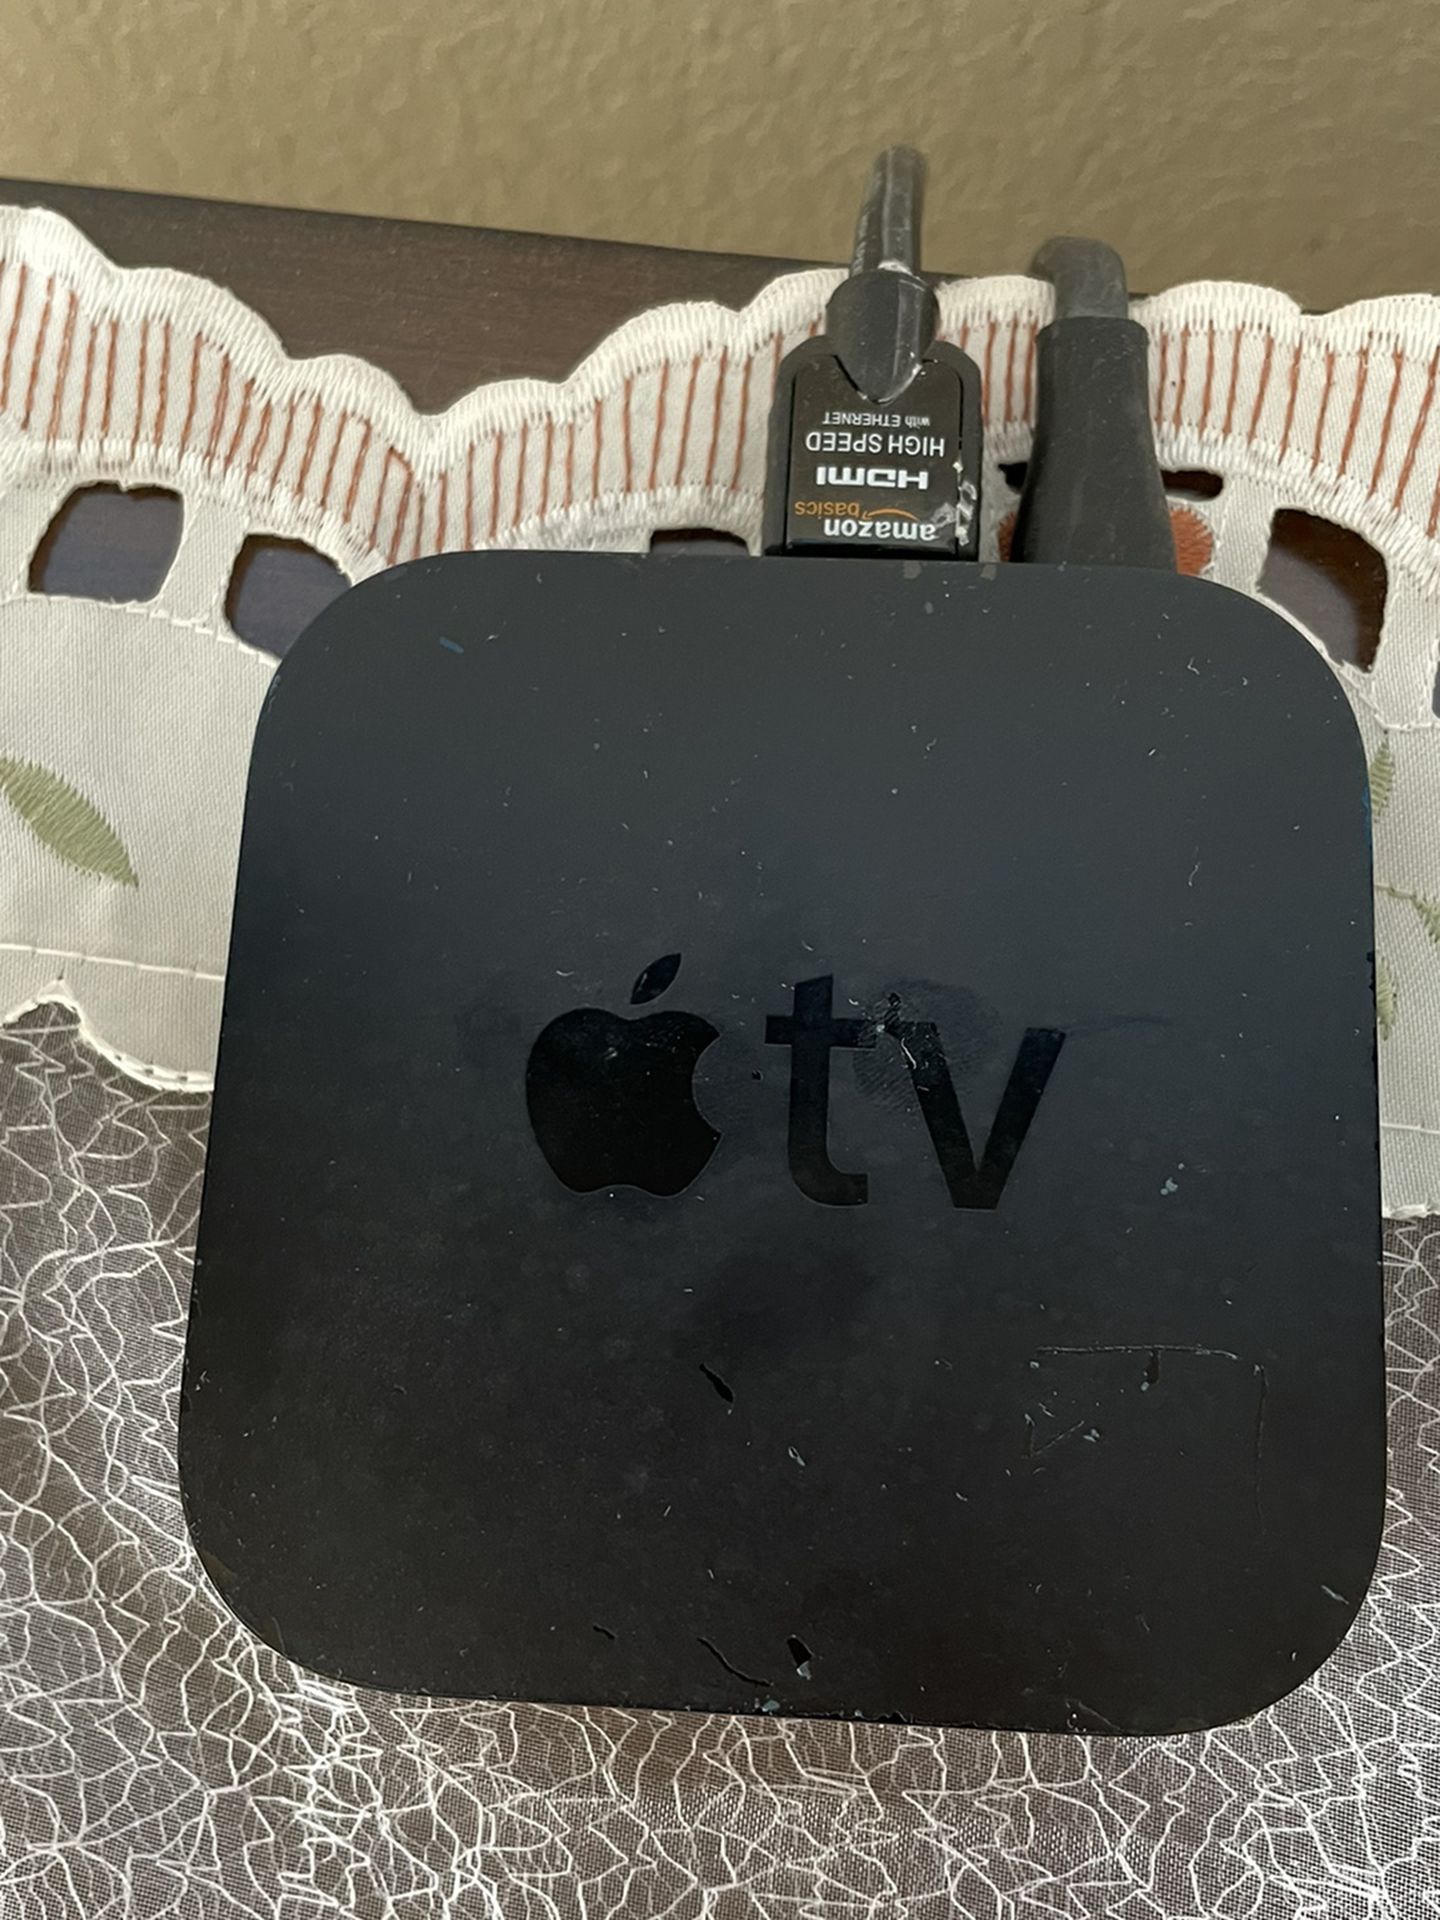 Apple TV 3rd Generation